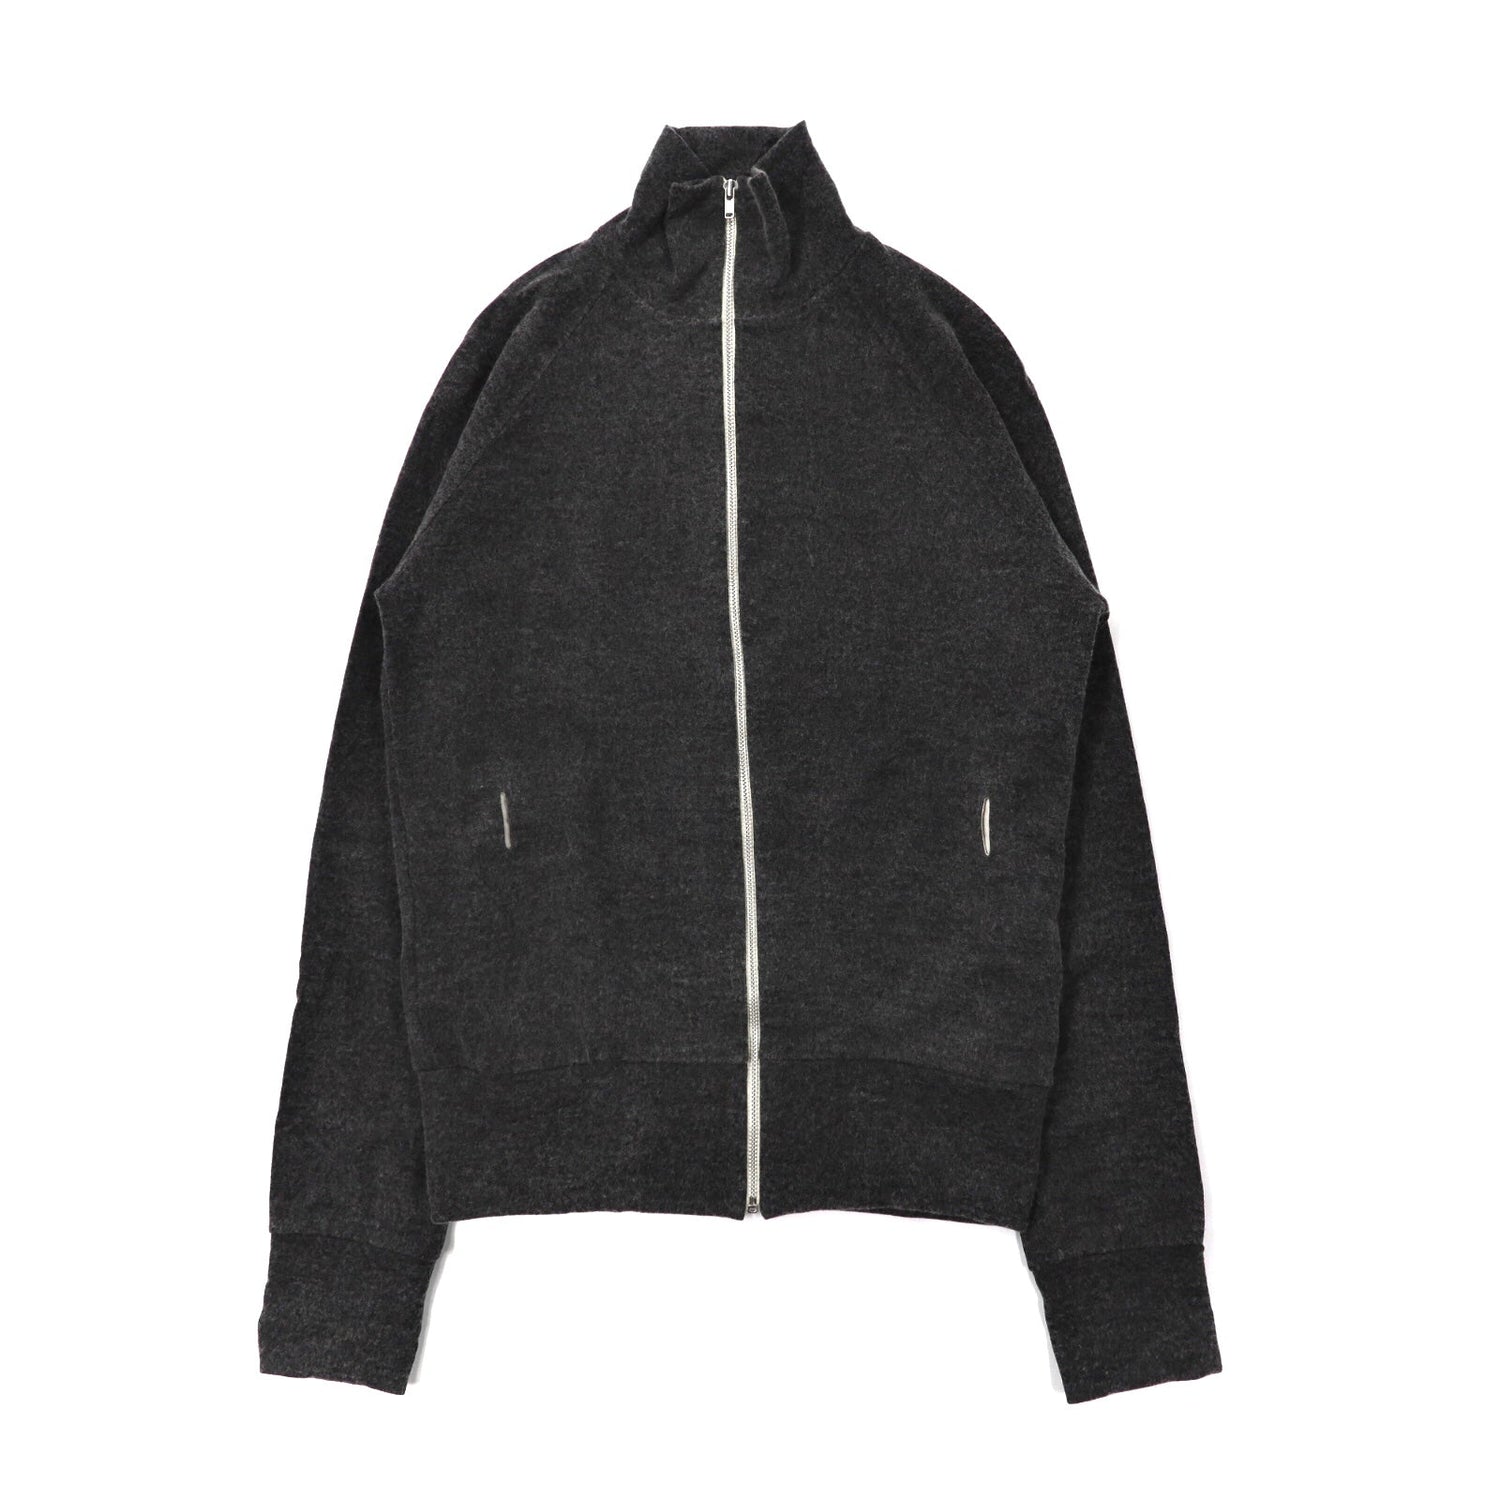 Y's ( Yohji Yamamoto ) Zip Knit Jacket 3 Gray Wool Made in Japan